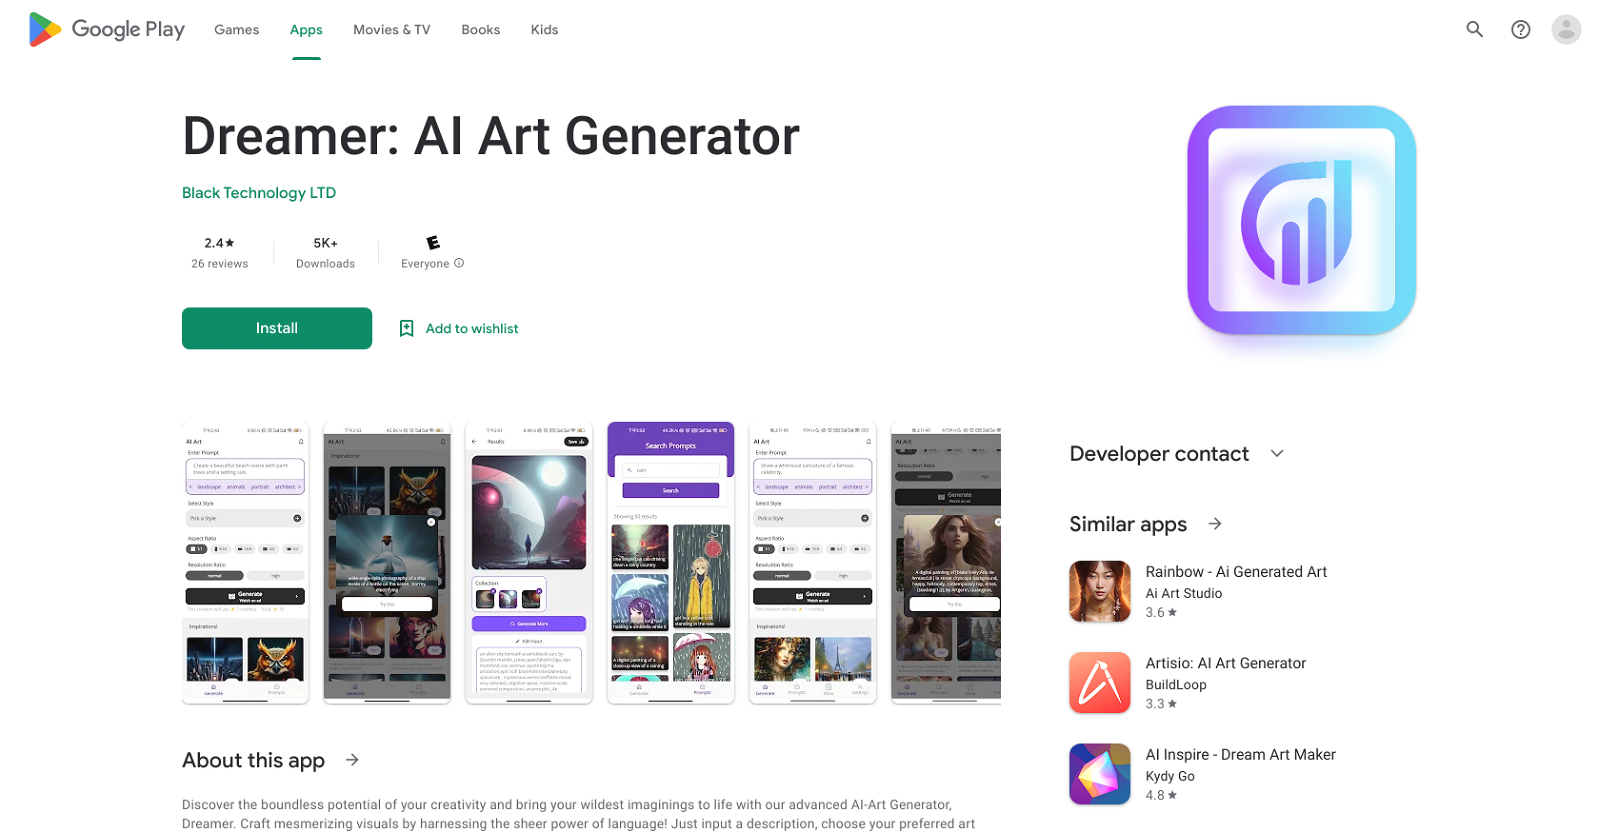 Dreamer: AI Art Generator image